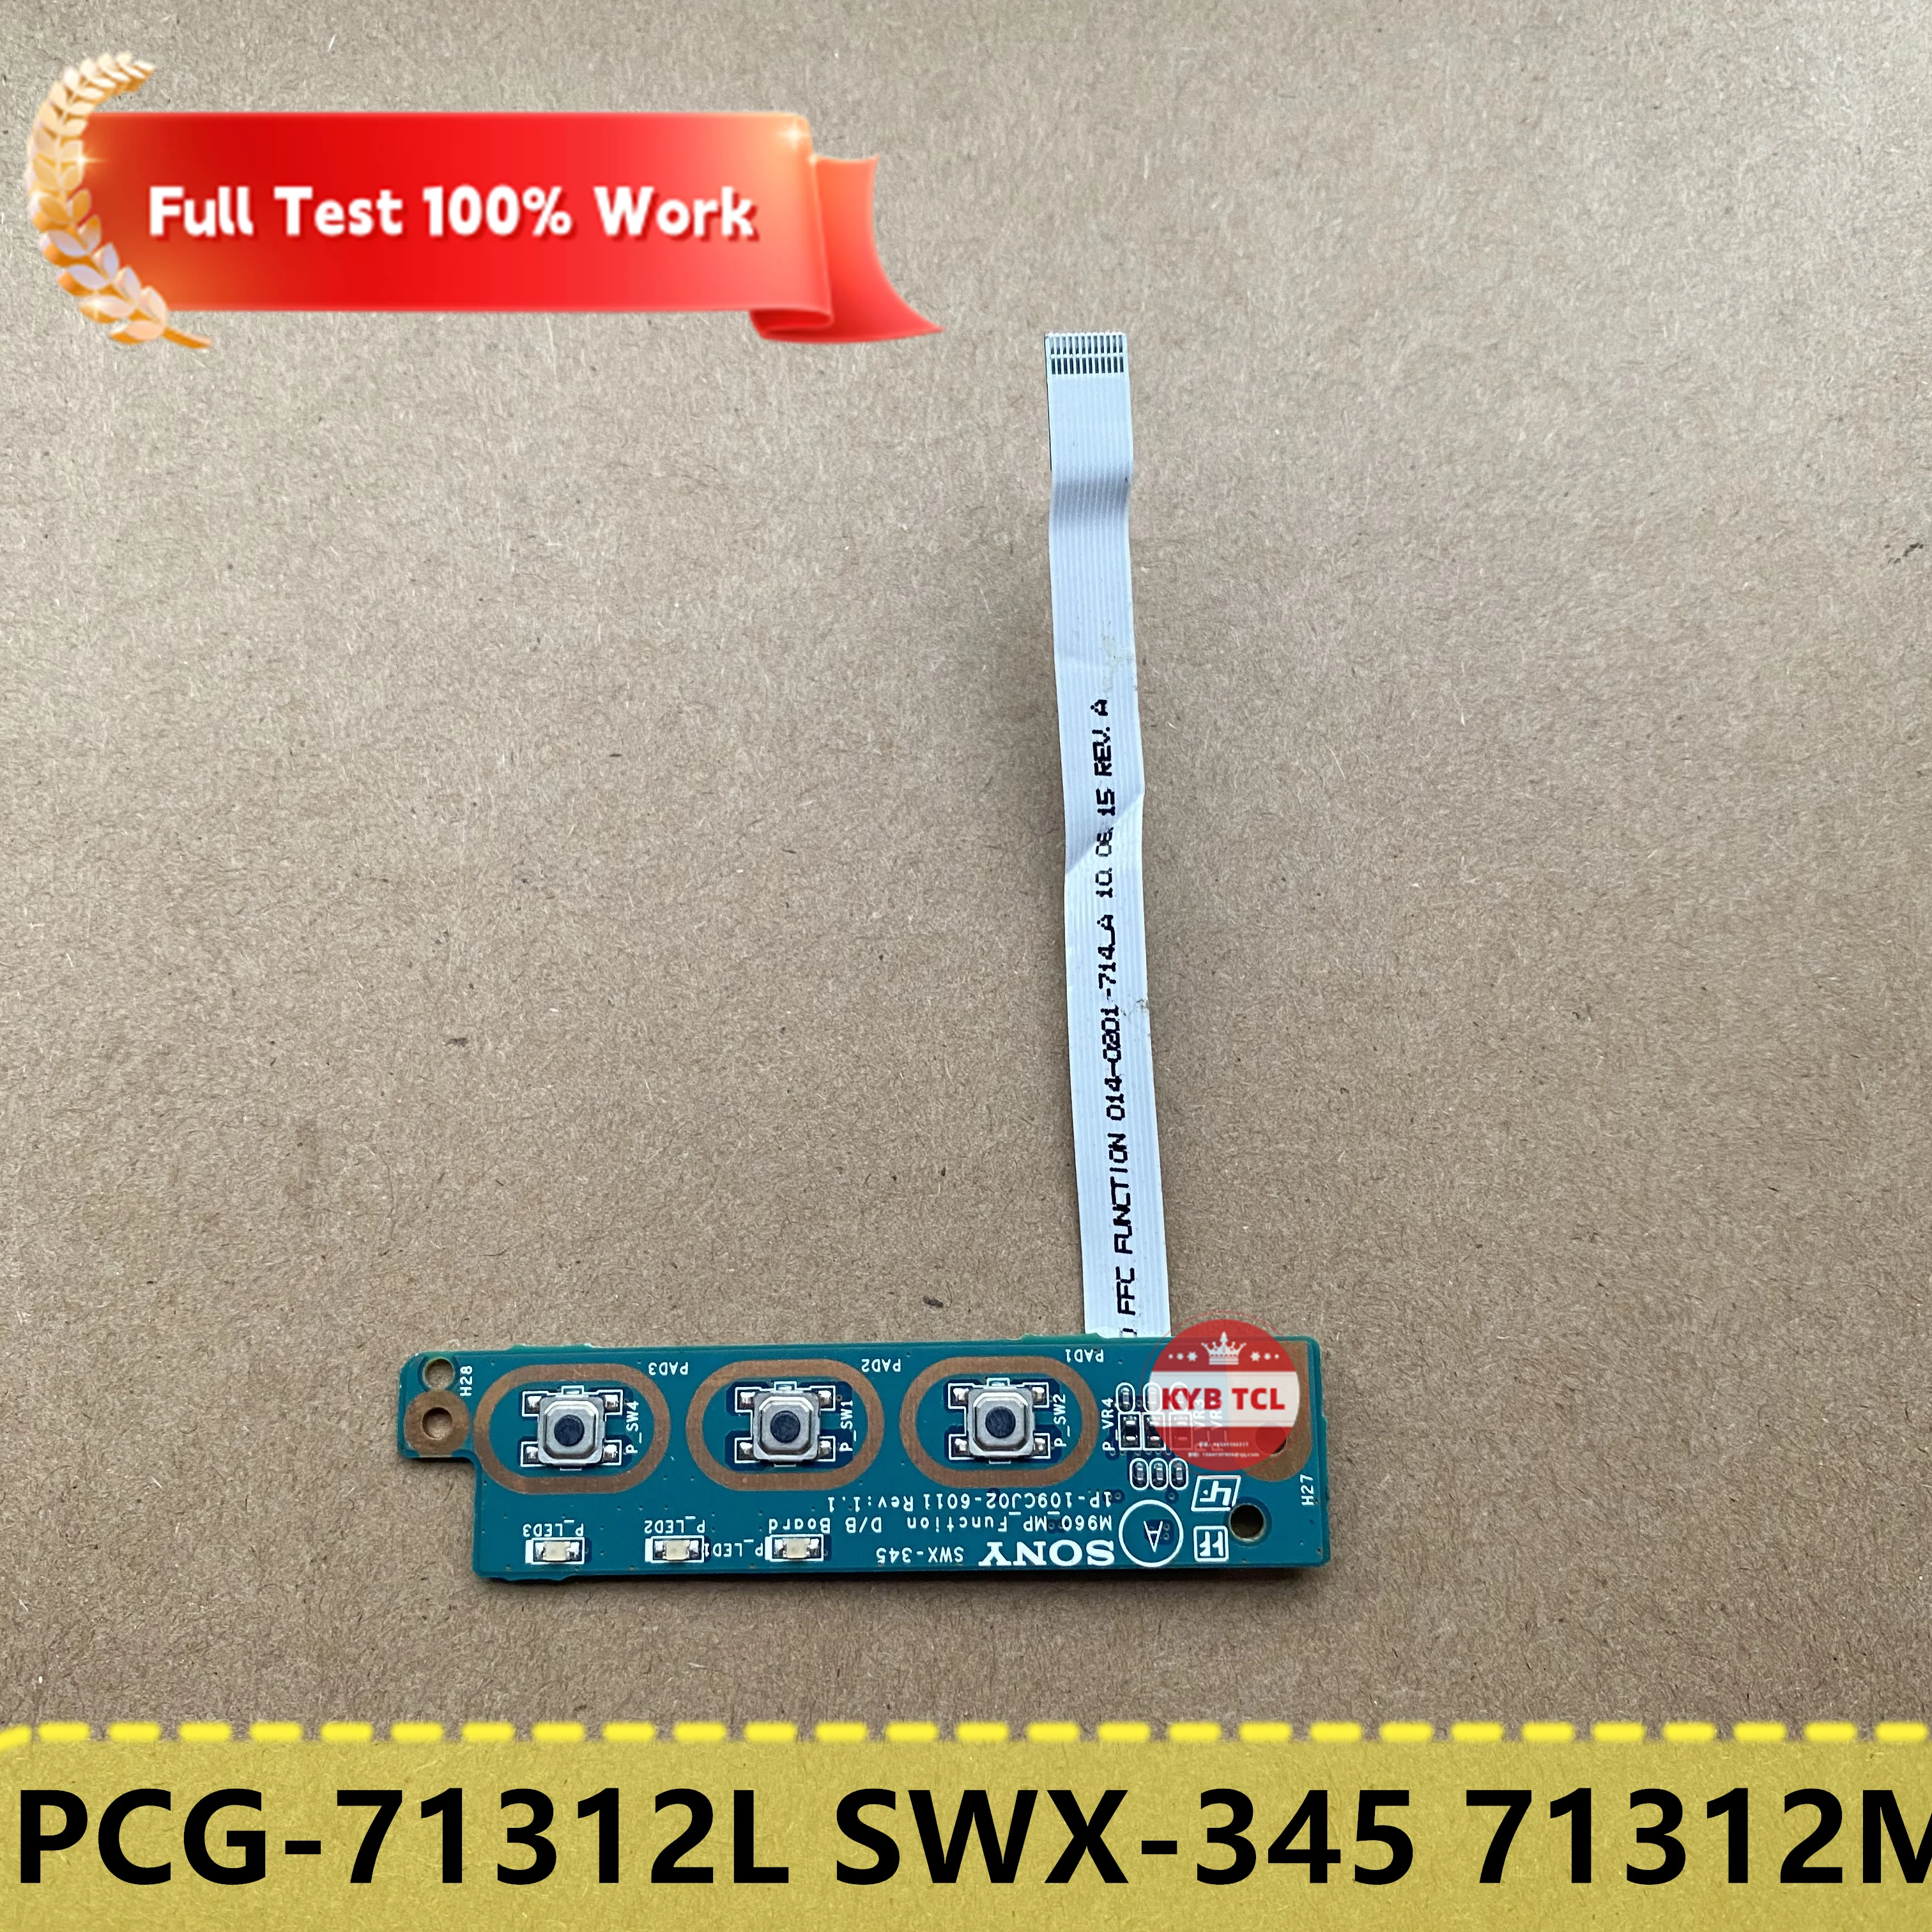 

Sony PCG-71312L SWX-345 PCG-71312M ноутбук питания кнопок питания w/ кабель 1P-109CJ02-6011 IP-109CJ02-6011 M960 ноутбук